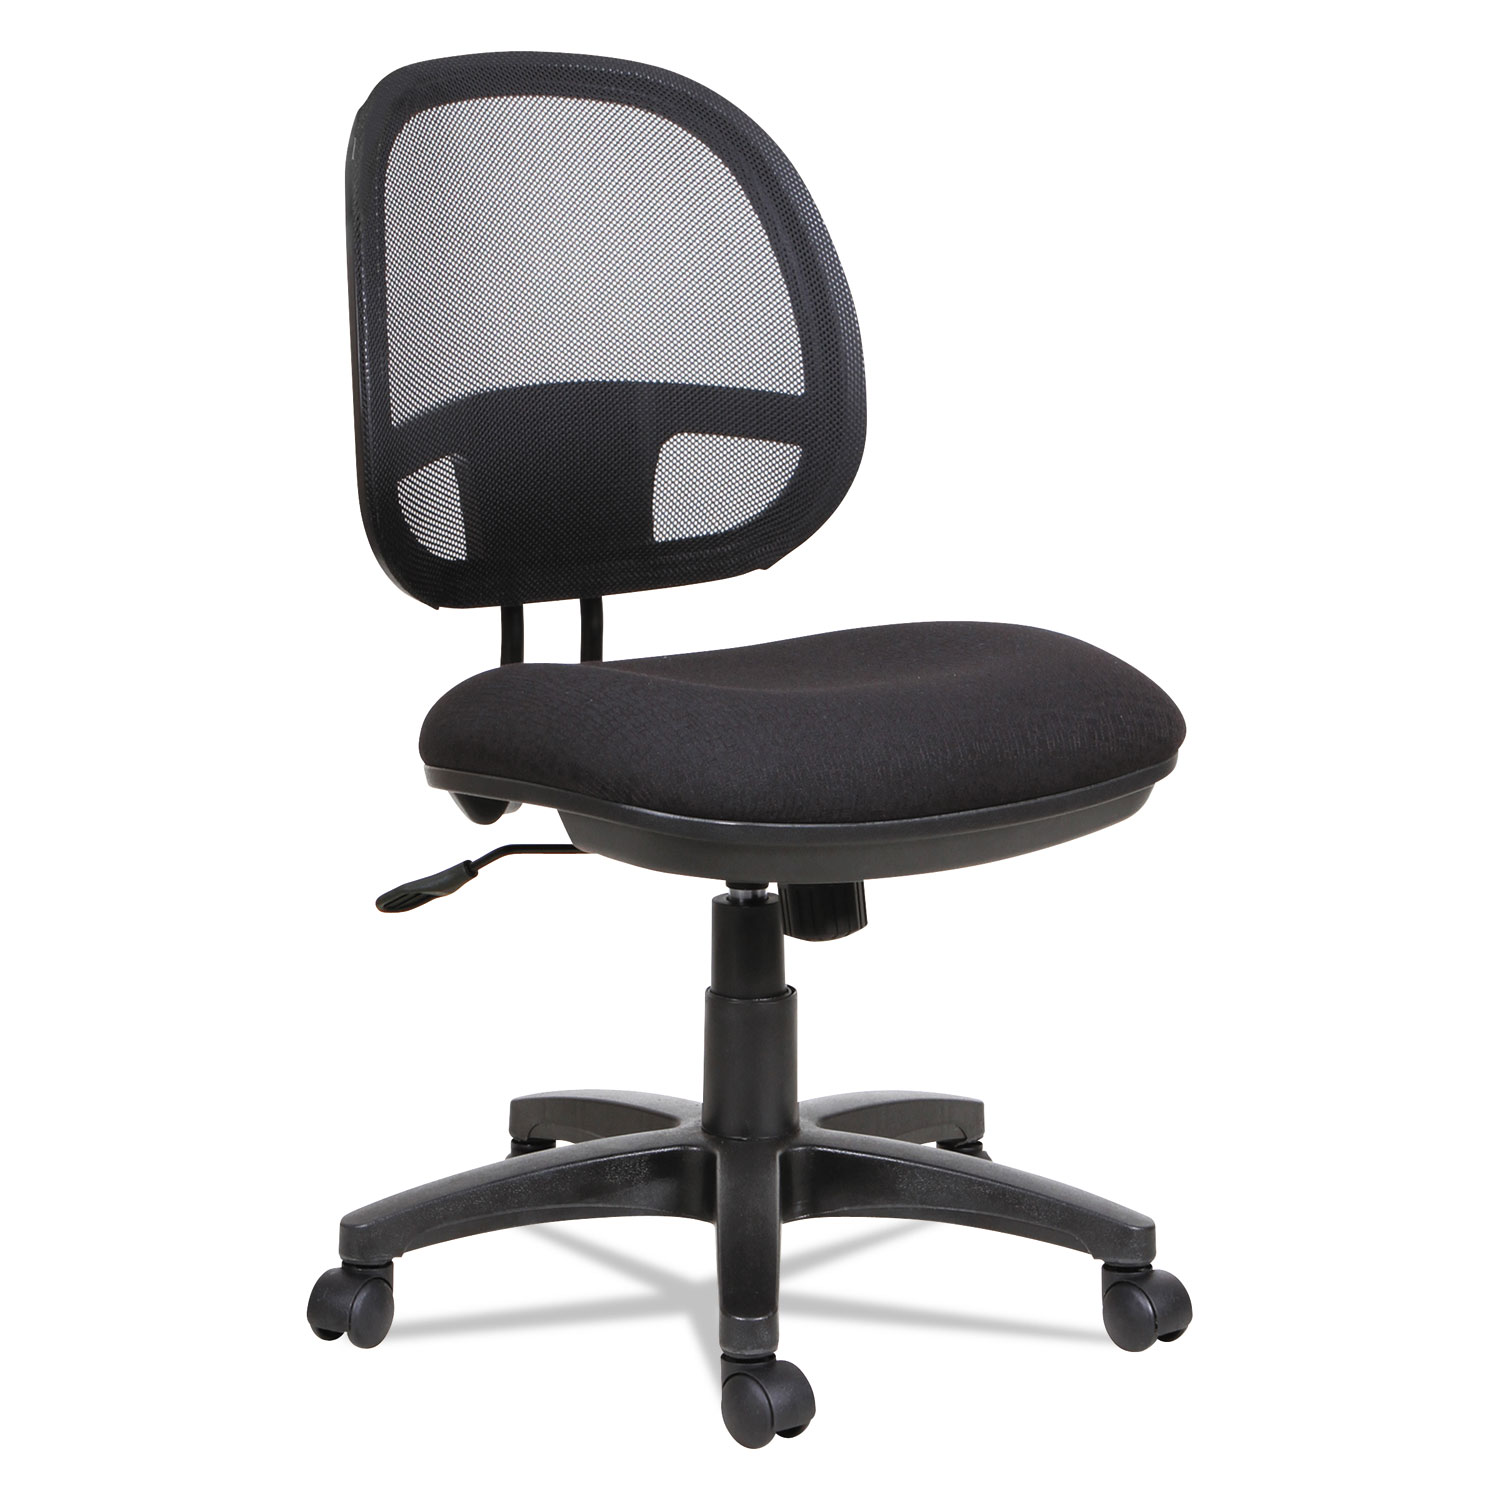  Alera ALEIN4814 Alera Interval Series Swivel/Tilt Mesh Chair, Supports up to 275 lbs., Black Seat/Black Back, Black Base (ALEIN4814) 